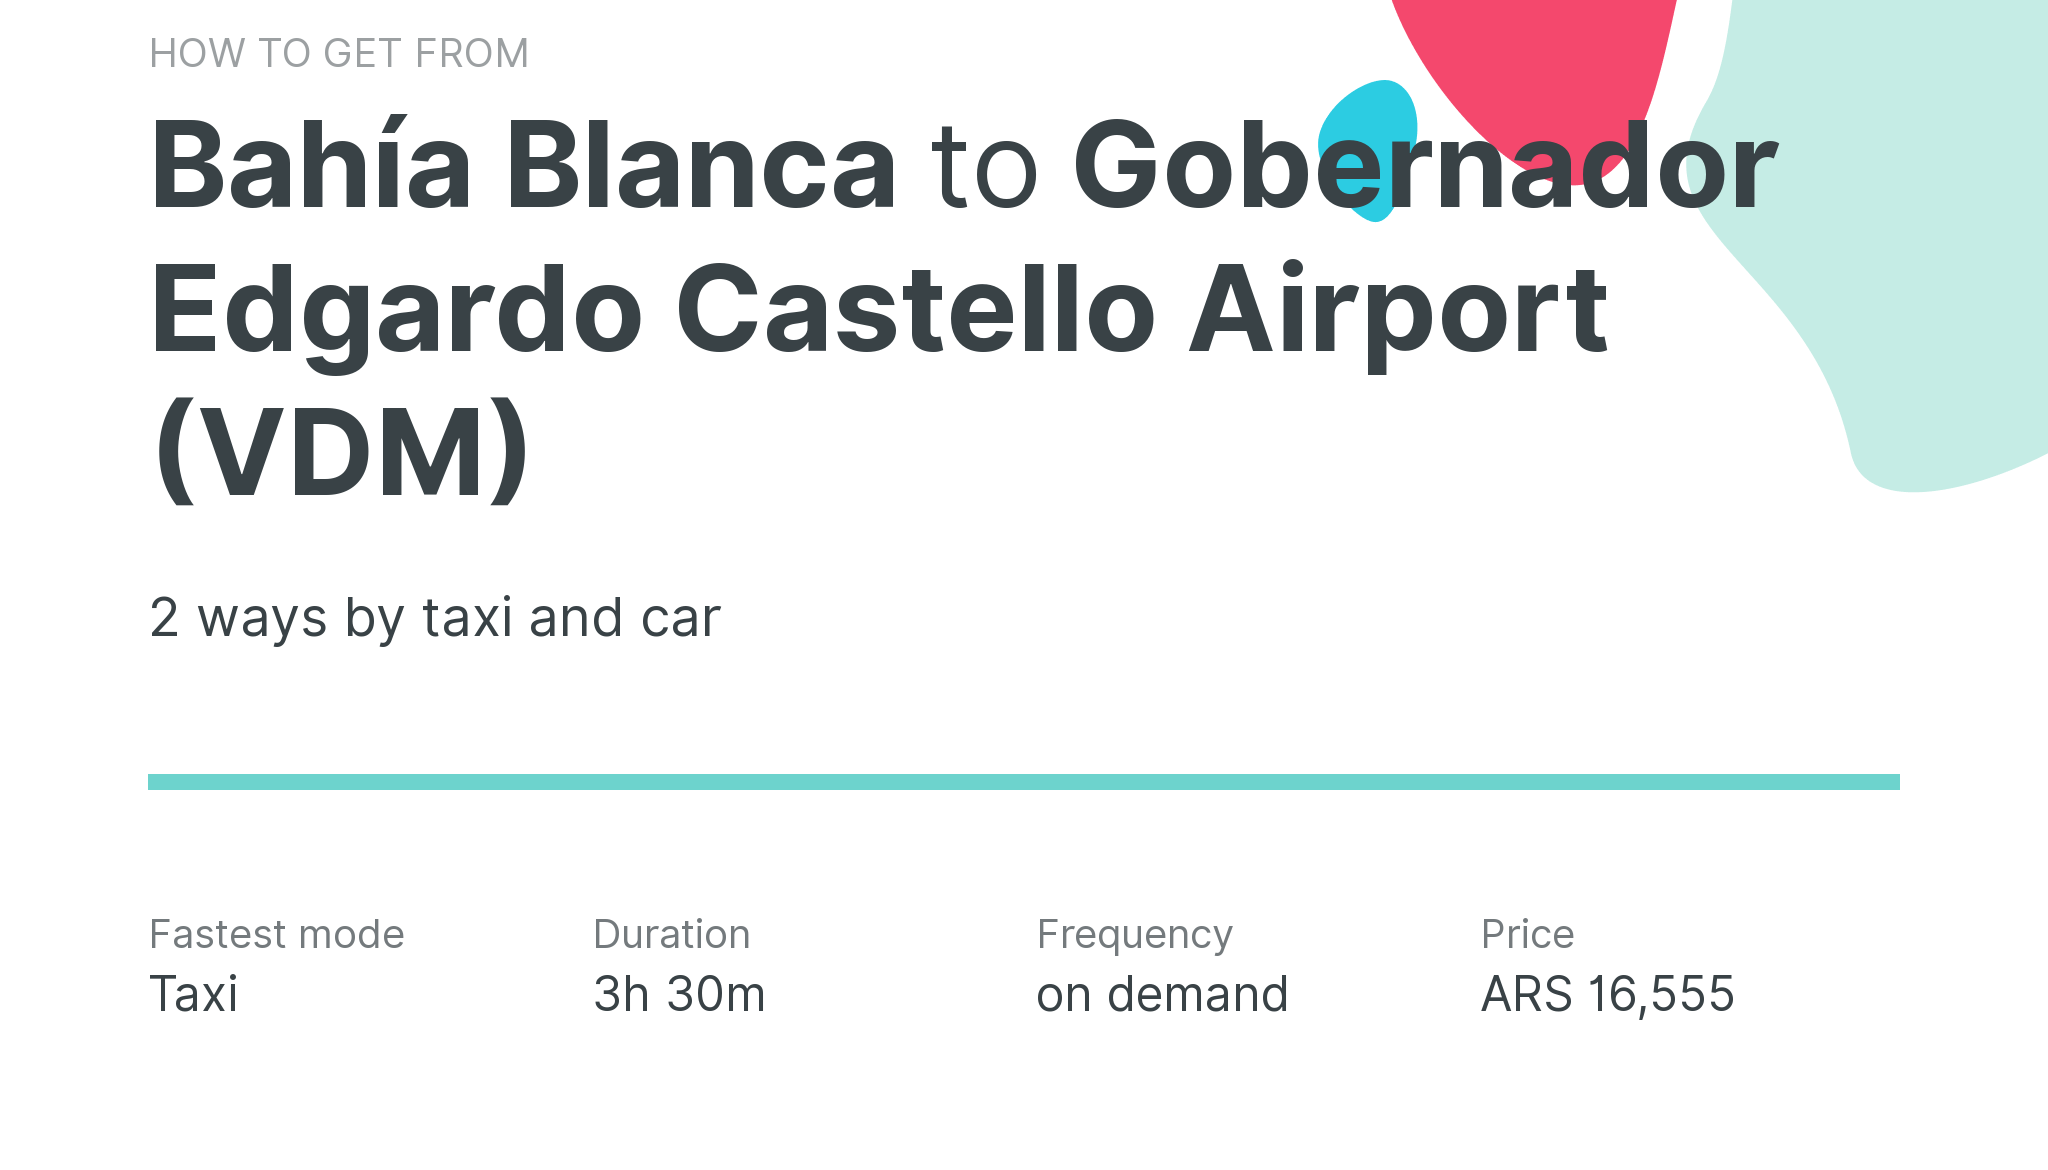 How do I get from Bahía Blanca to Gobernador Edgardo Castello Airport (VDM)